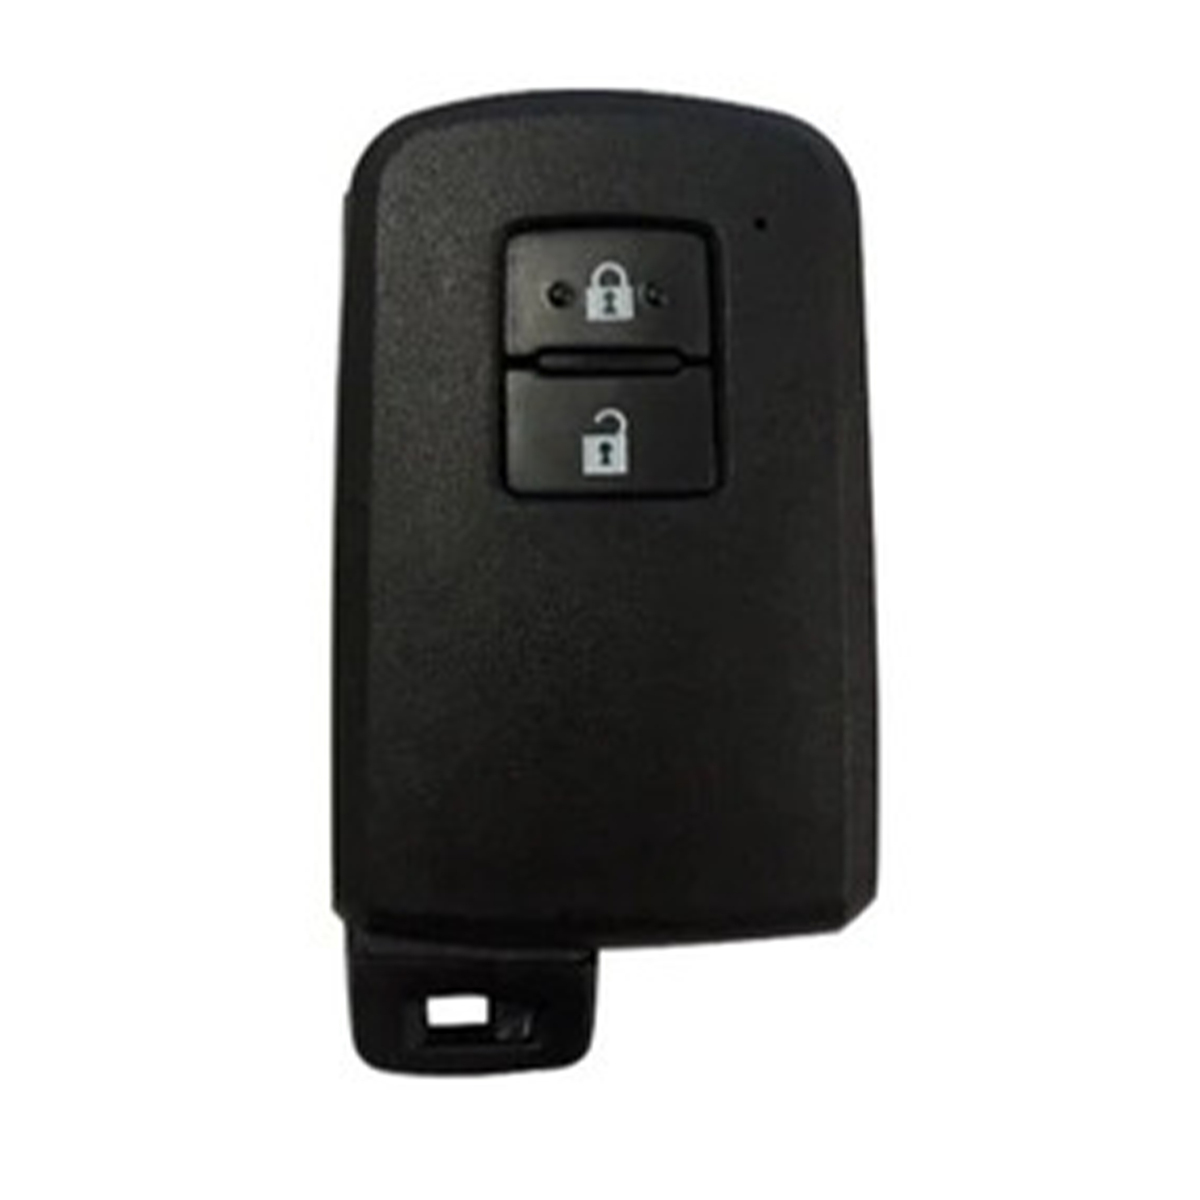 Toyota compatible 2 button smart remote 0020, 312/314Mhz